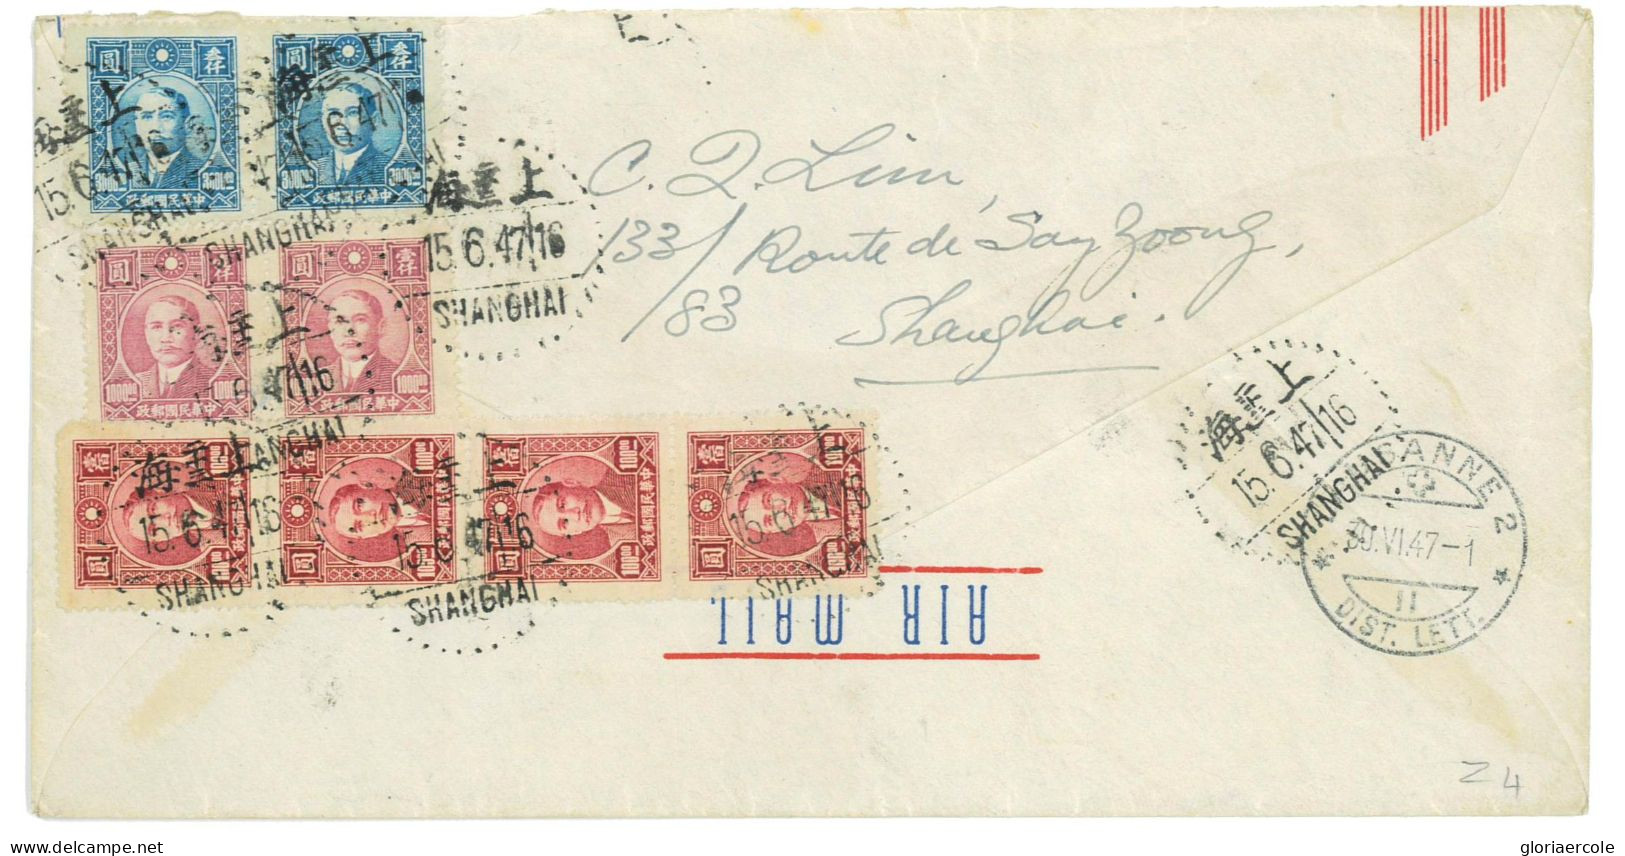 P2936 -CHINA , REGISTRED LETTER FROM SHANGAI TO SWITZERLAND, 1947 $ 8400 FRANKING. - 1912-1949 Republik